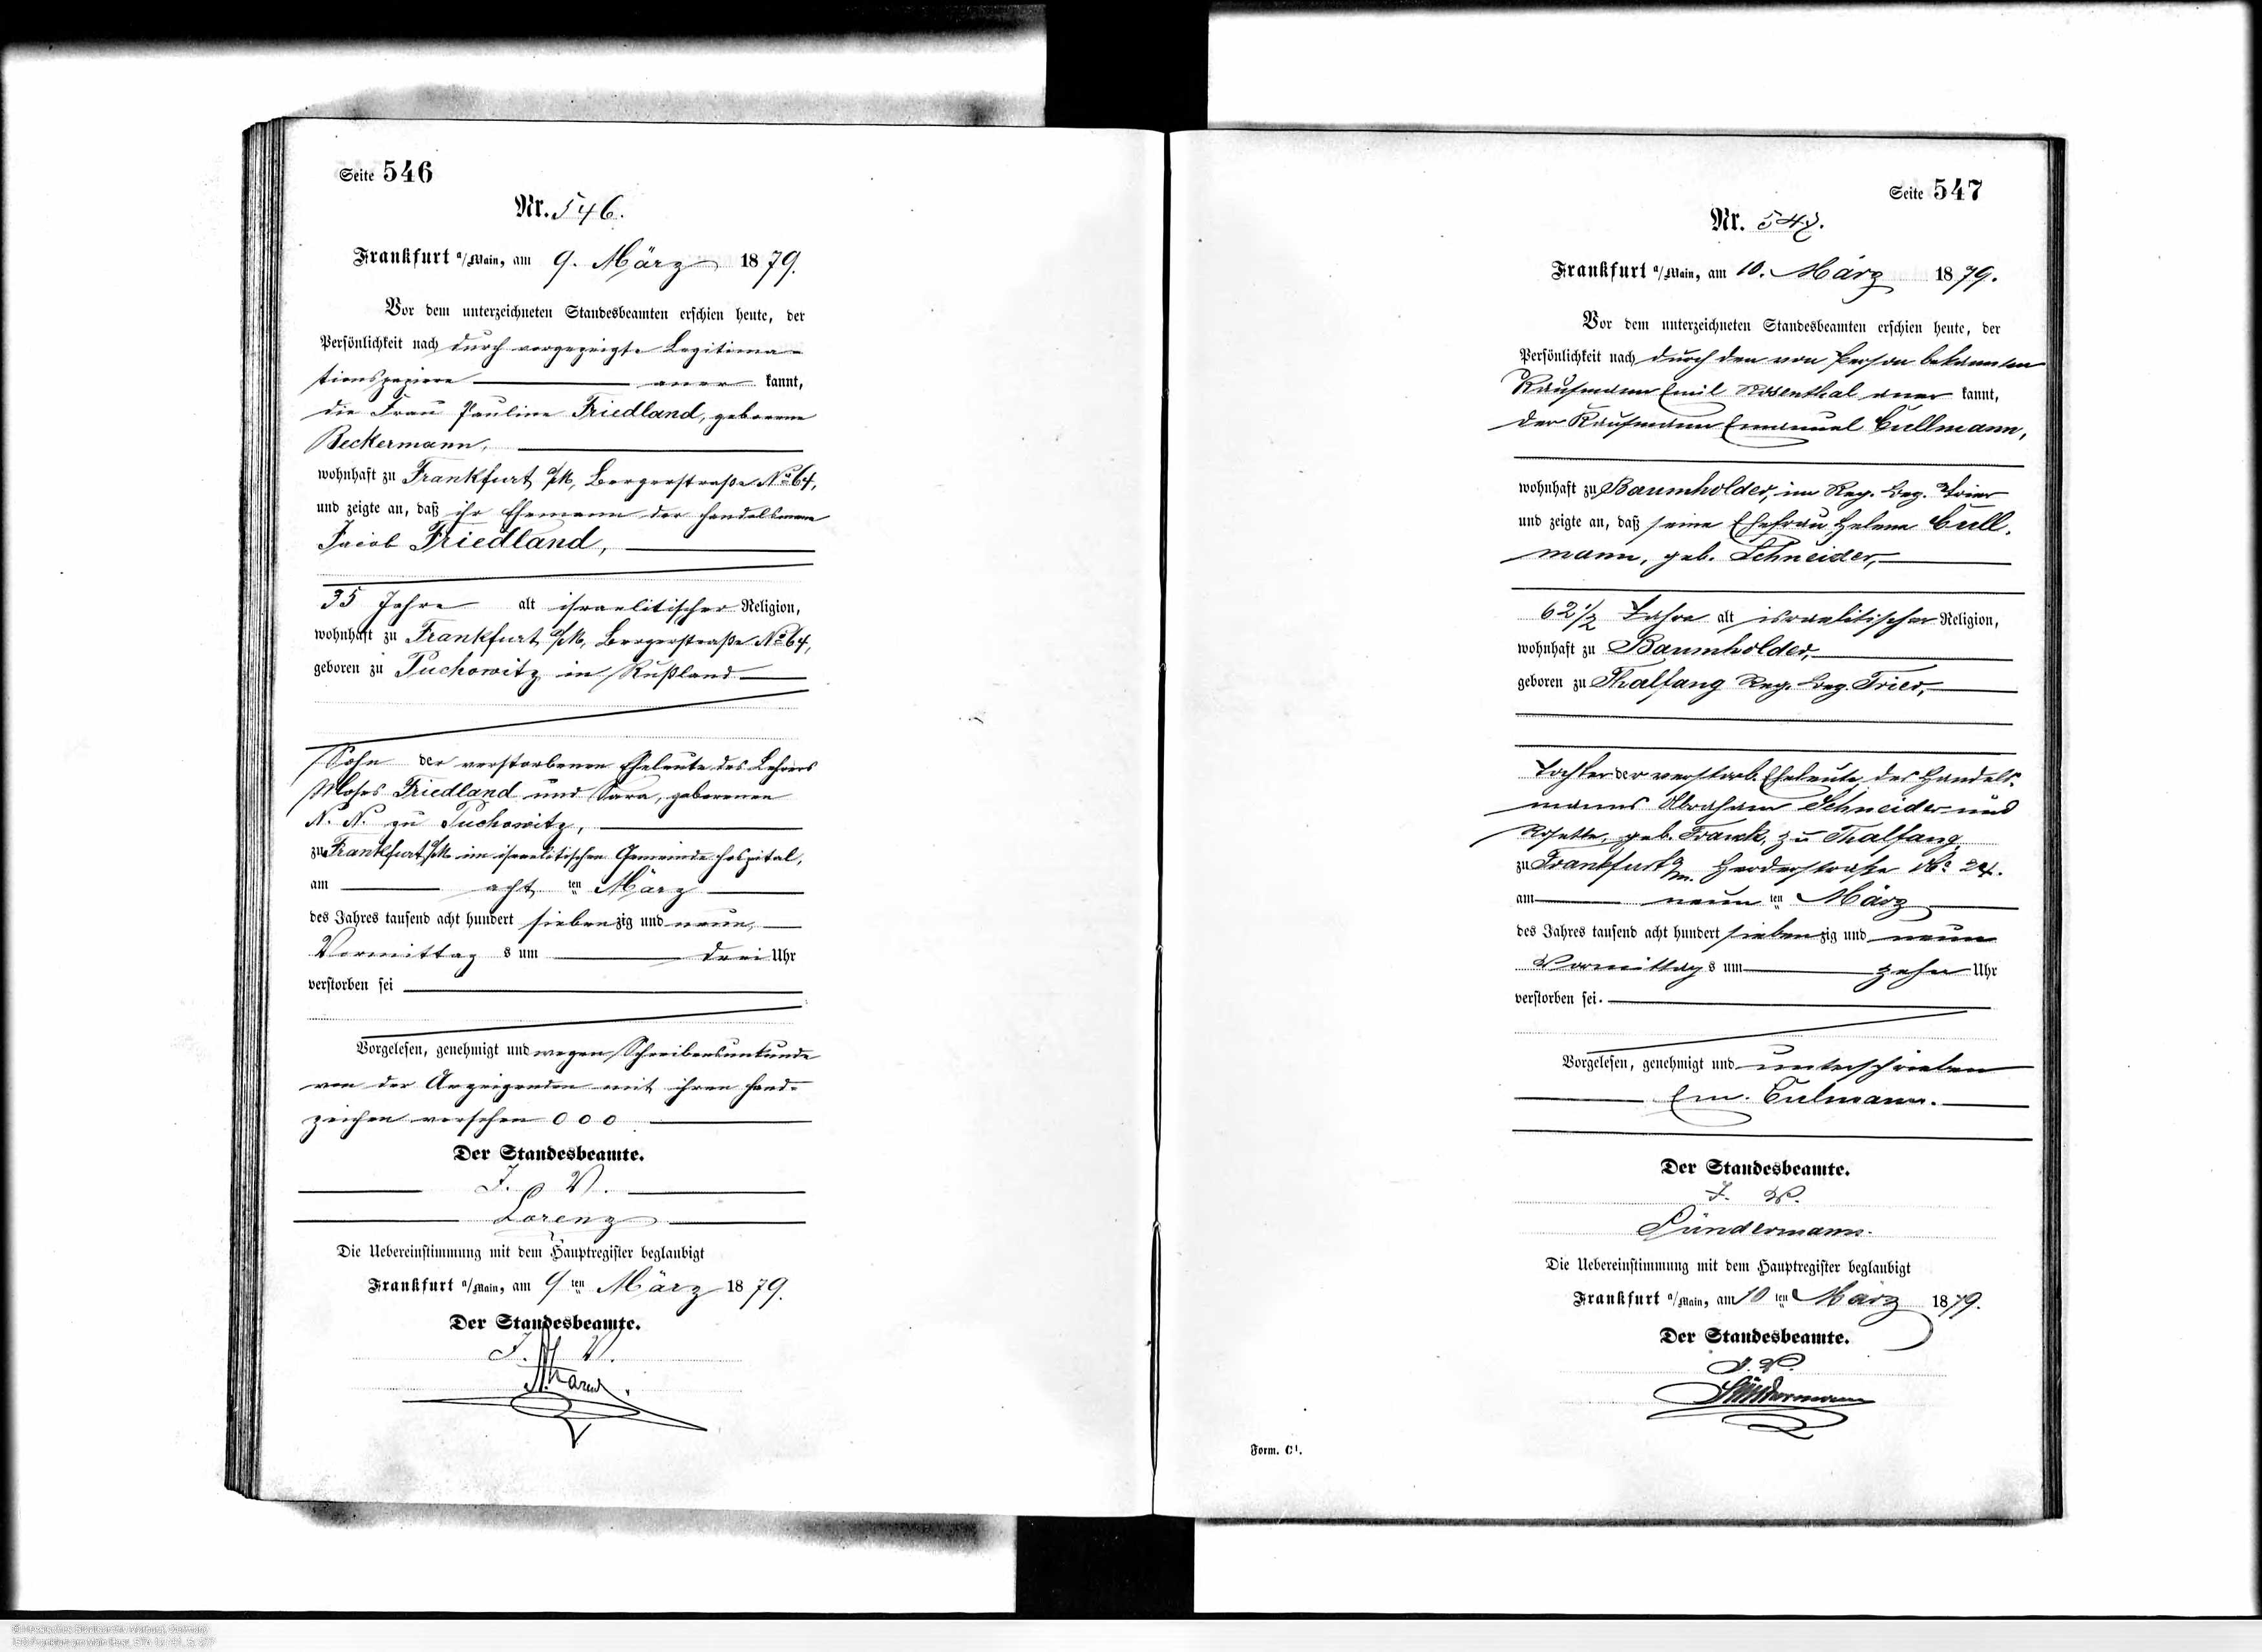 Death Certificate, Helene Cullmann